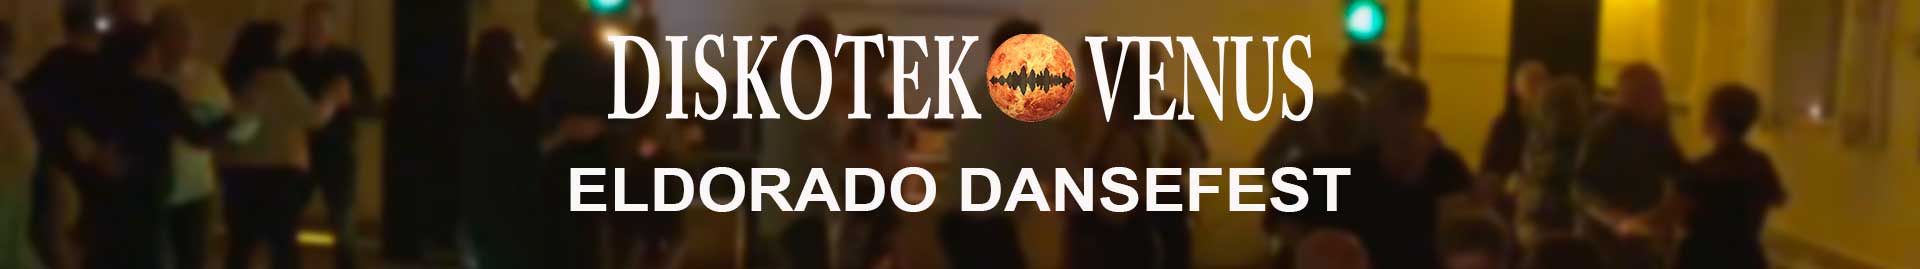 eldorado dansefest